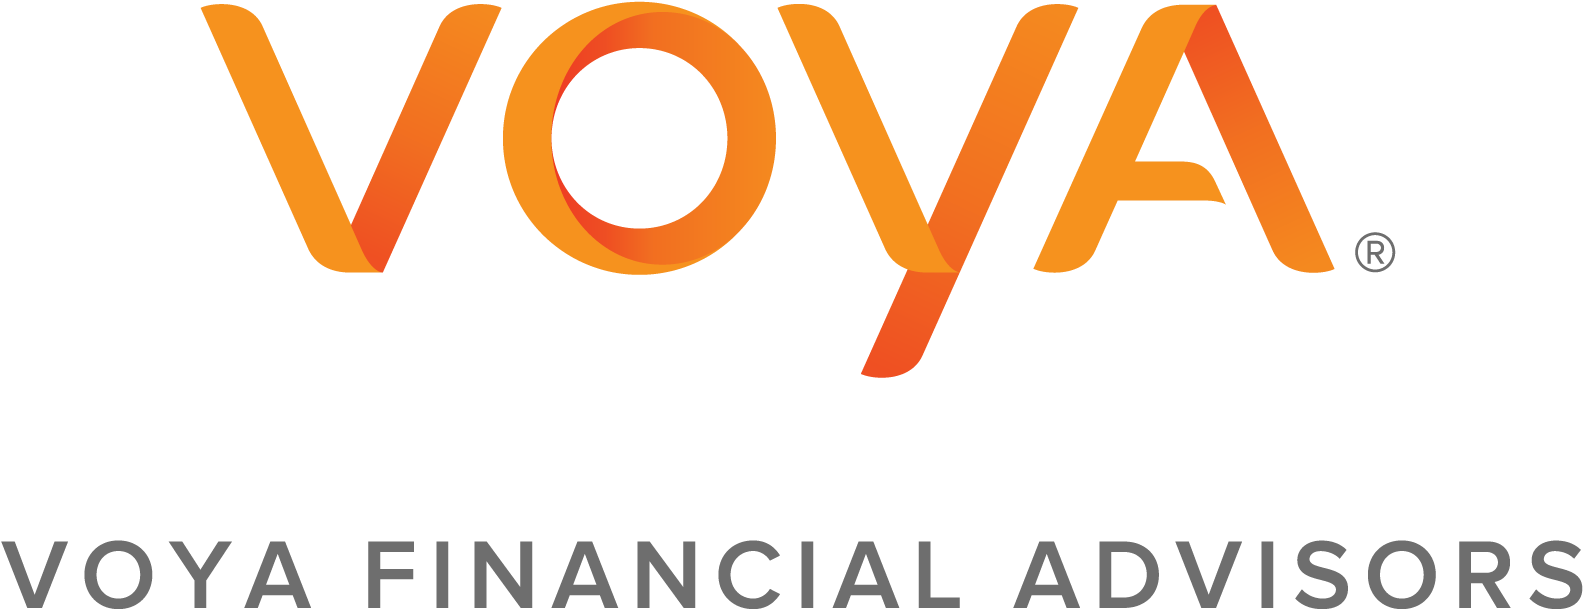 voya-financial-advisors-logo.png